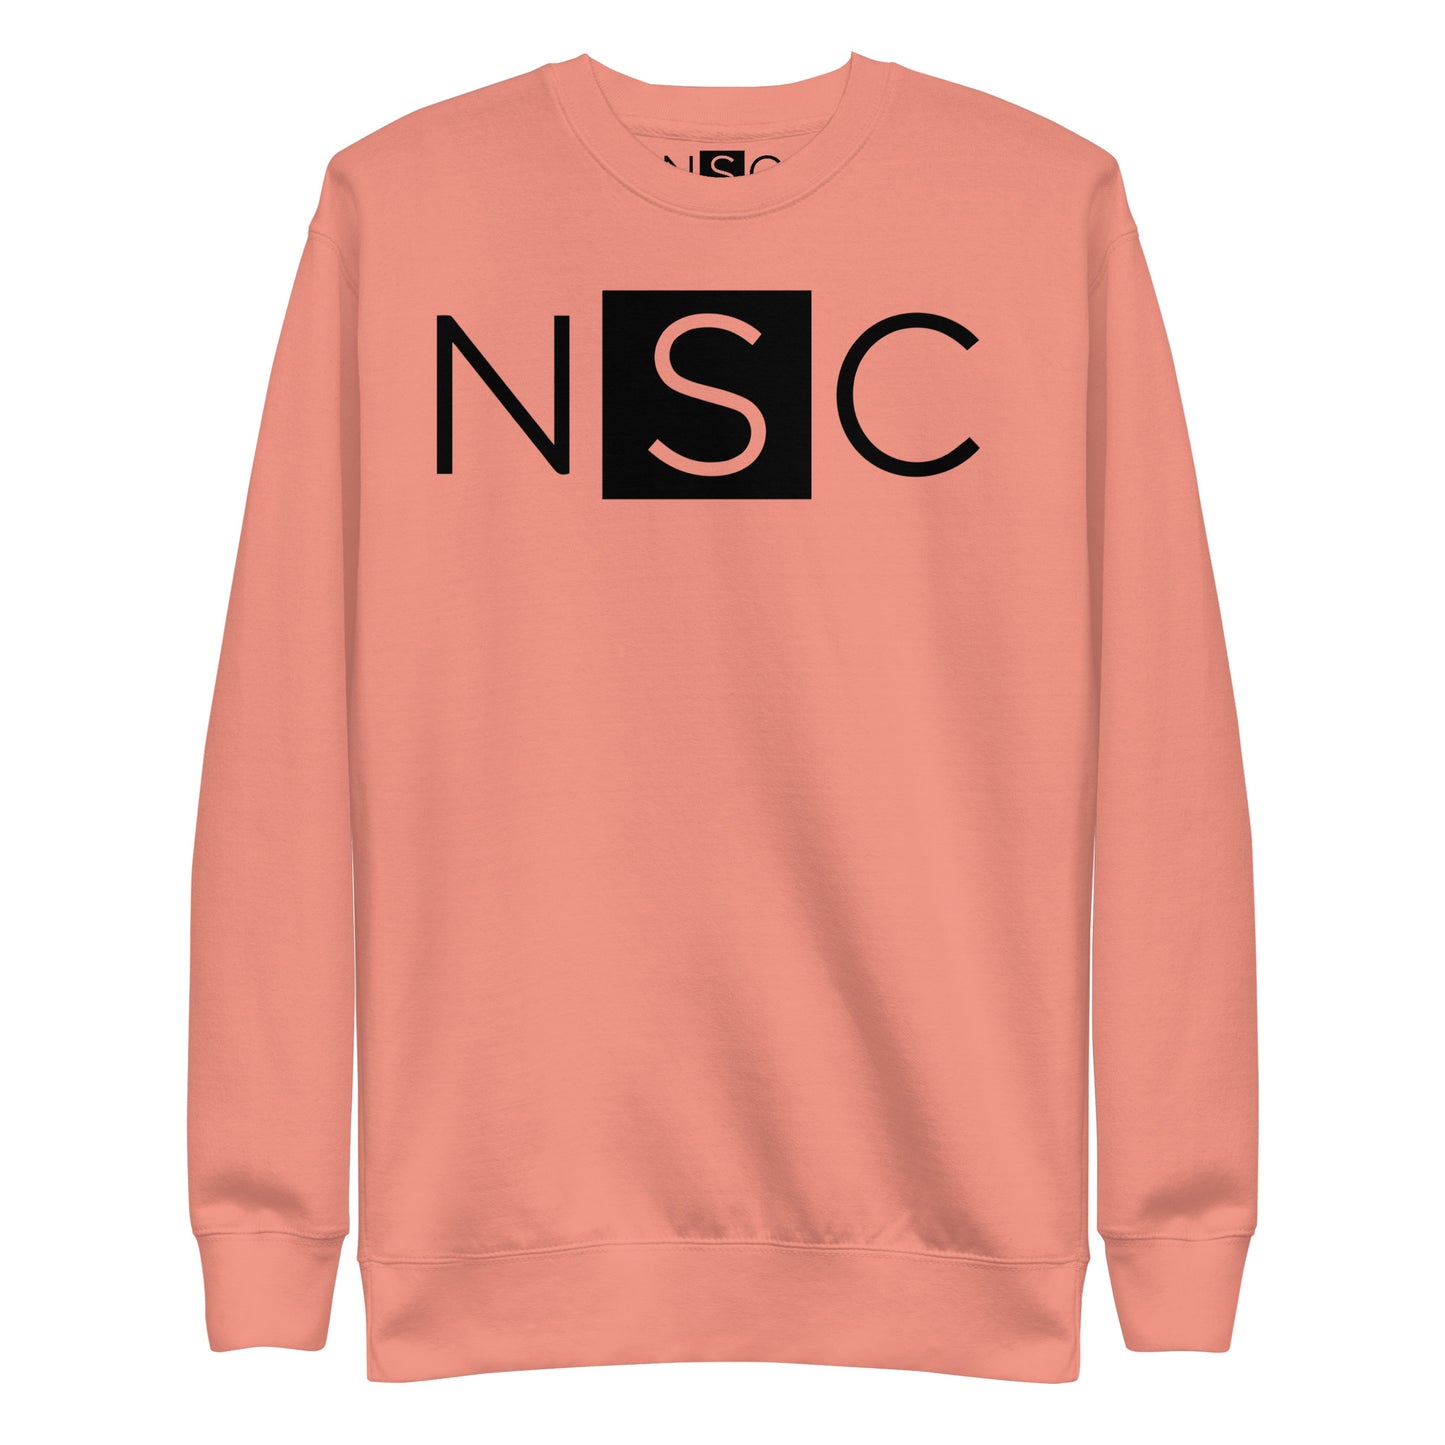 Nashville Sampling Co (NSC) Unisex Premium Sweatshirt